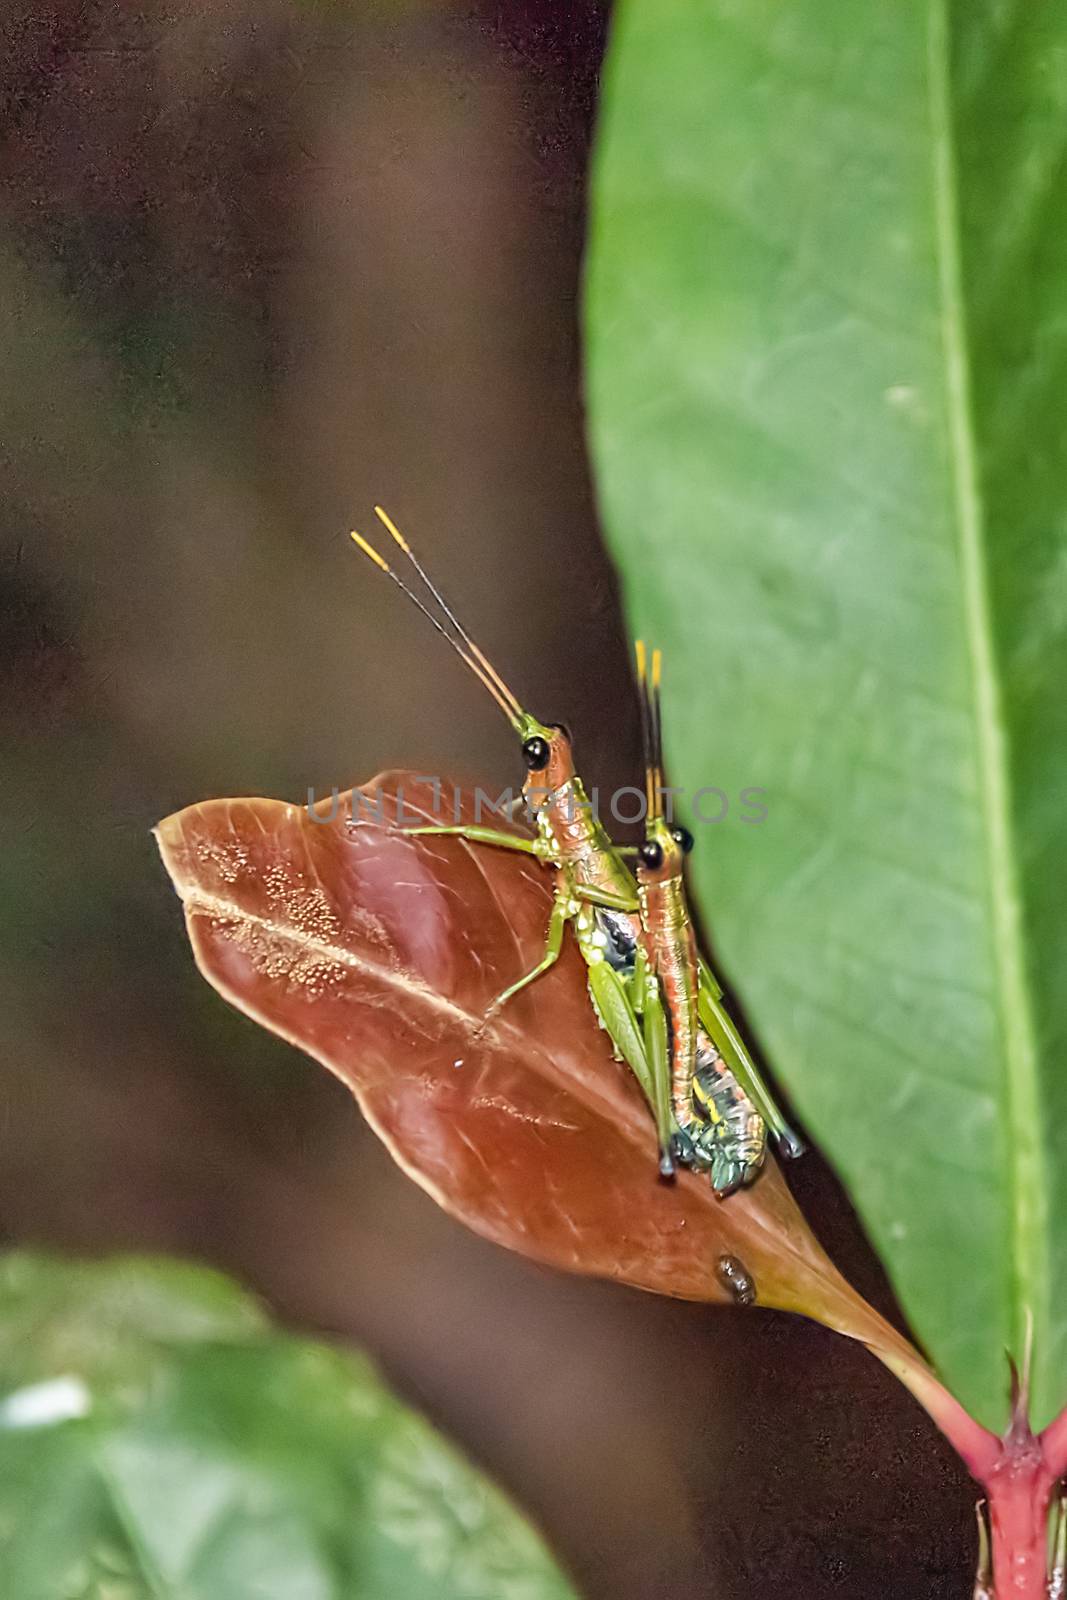 Deniyaya, Sir Lanka - Sept 2015: Rakwana ornata - cricket during reproduction